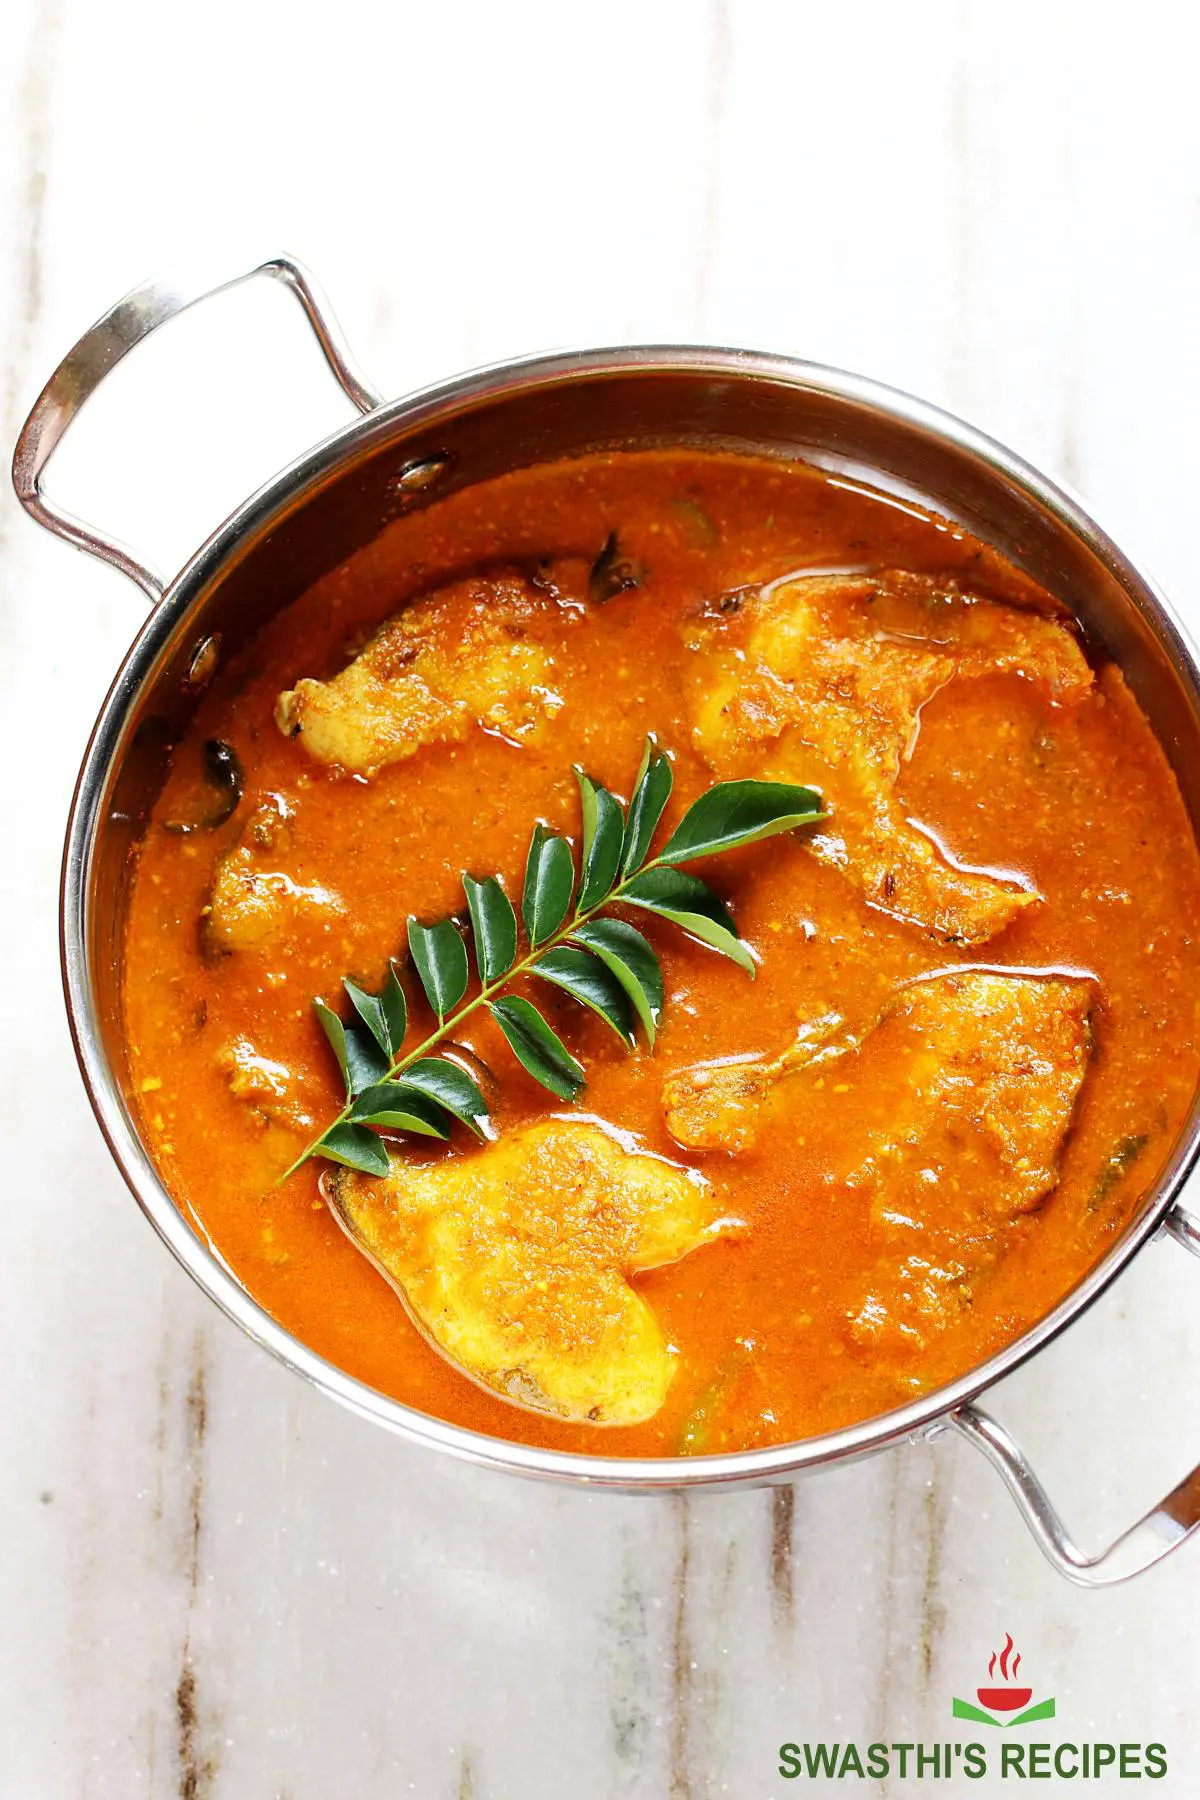 Fish Curry Recipe (Indian Fish Masala) - Swasthi's Recipes